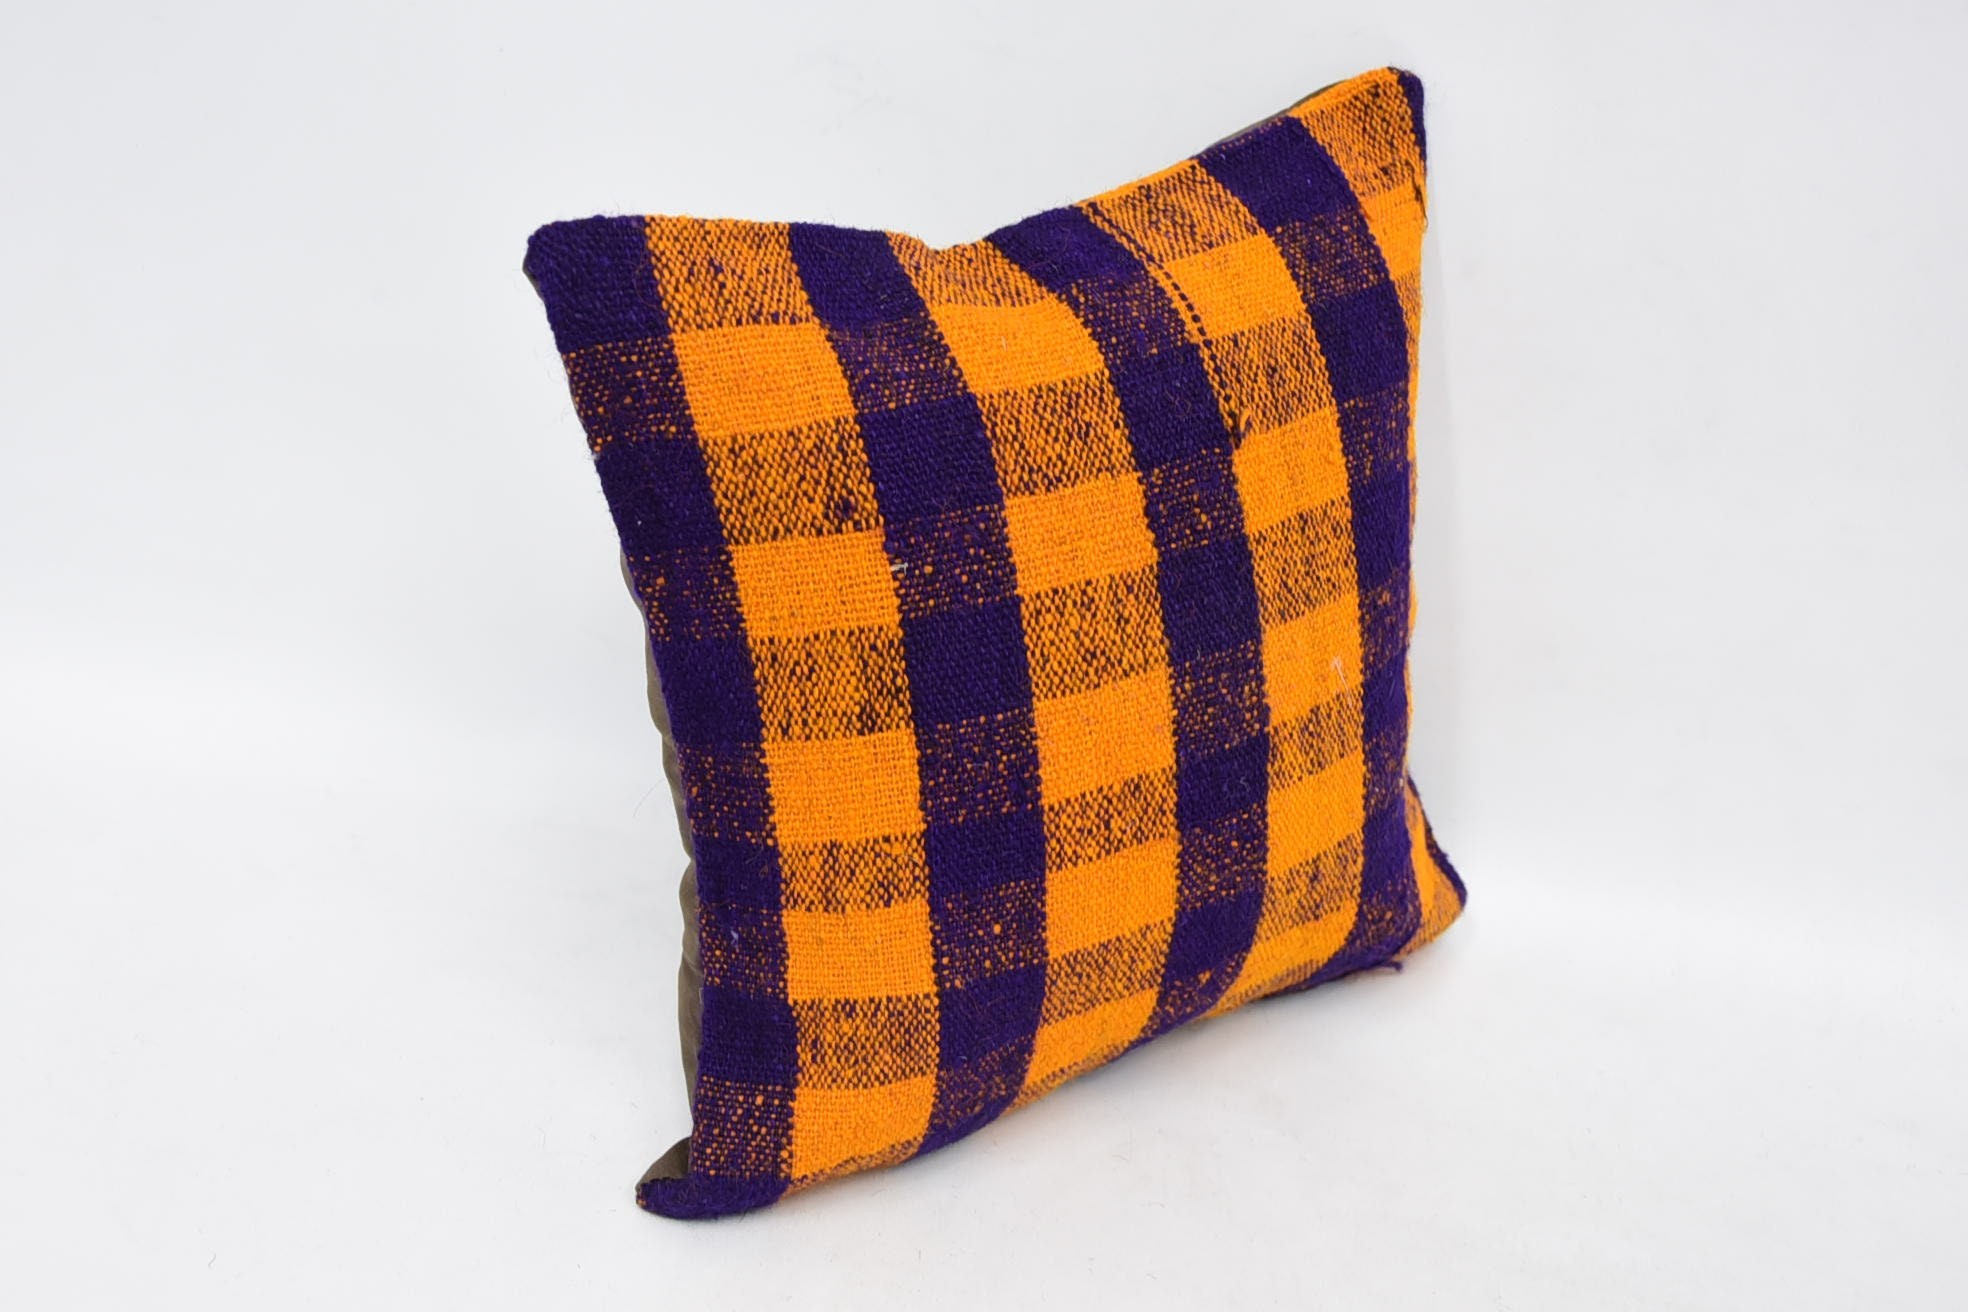 Retro Throw Pillow Cover, Kilim Pillow Cover, 12"x12" Orange Cushion Cover, Turkish Pillow, Ethnical Kilim Rug Pillow